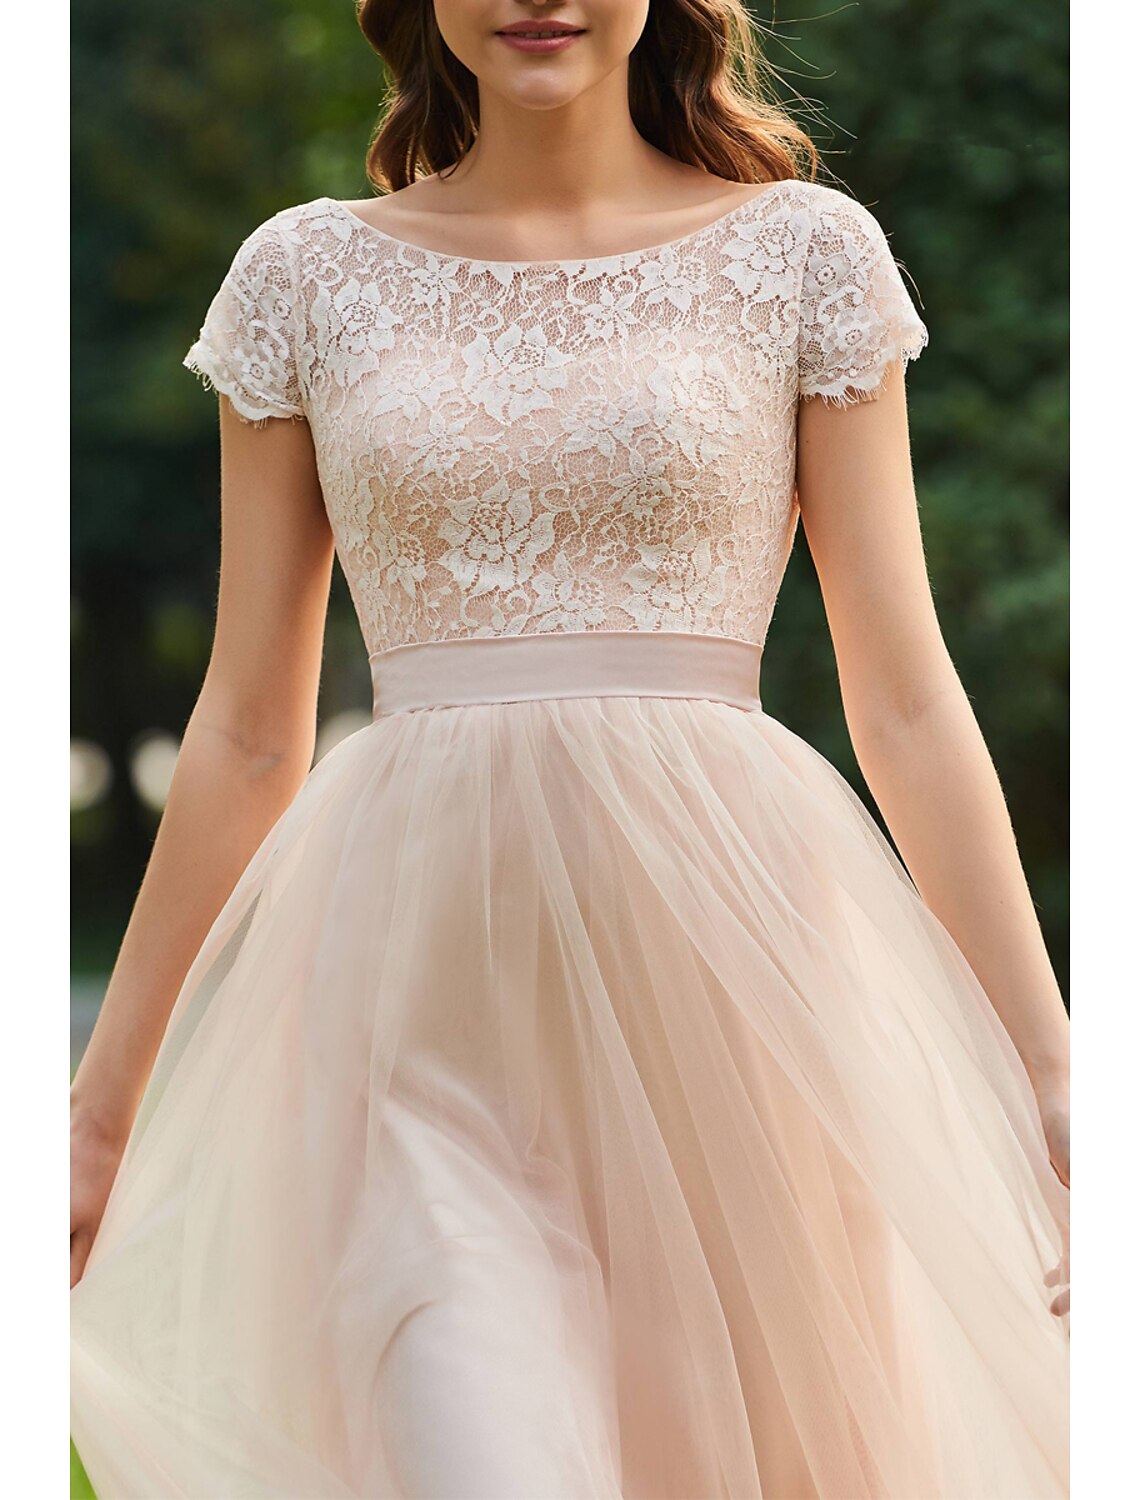 A-Line Bridesmaid Dress Jewel Neck Short Sleeve Elegant Floor Length Chiffon / Lace with Lace / Pleats